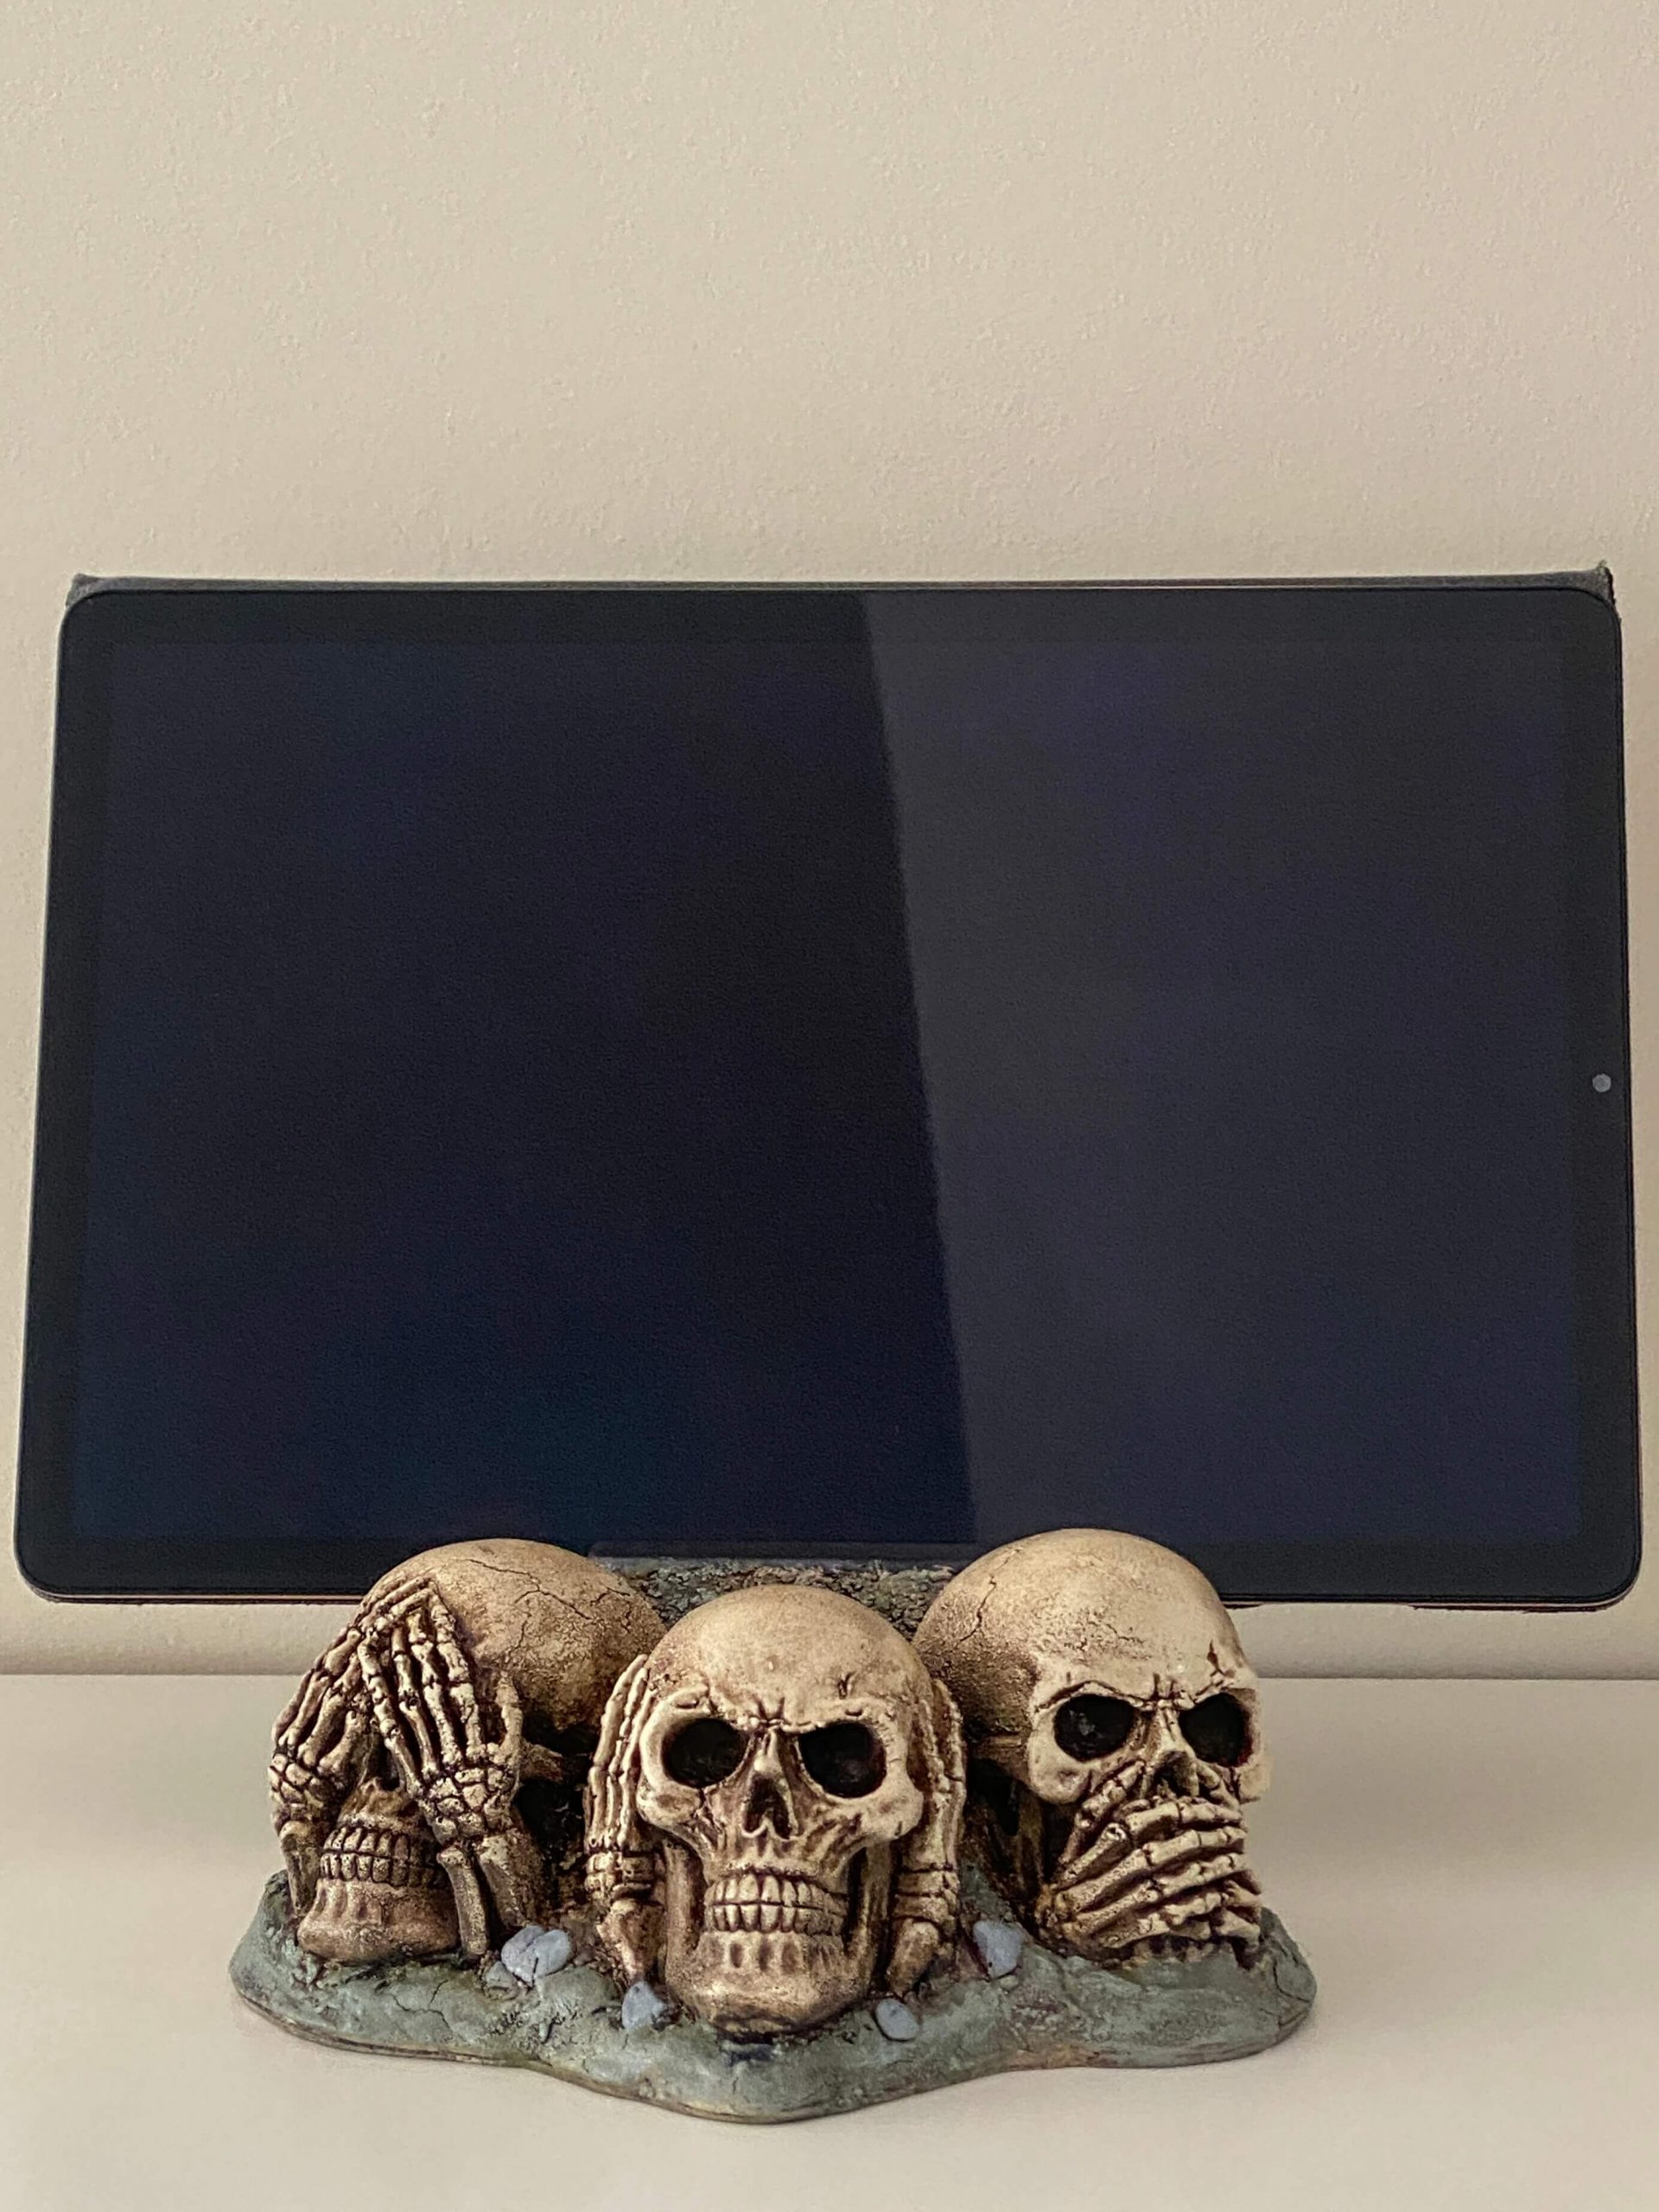 Skull Phone Stand - Skull Tablet Stand